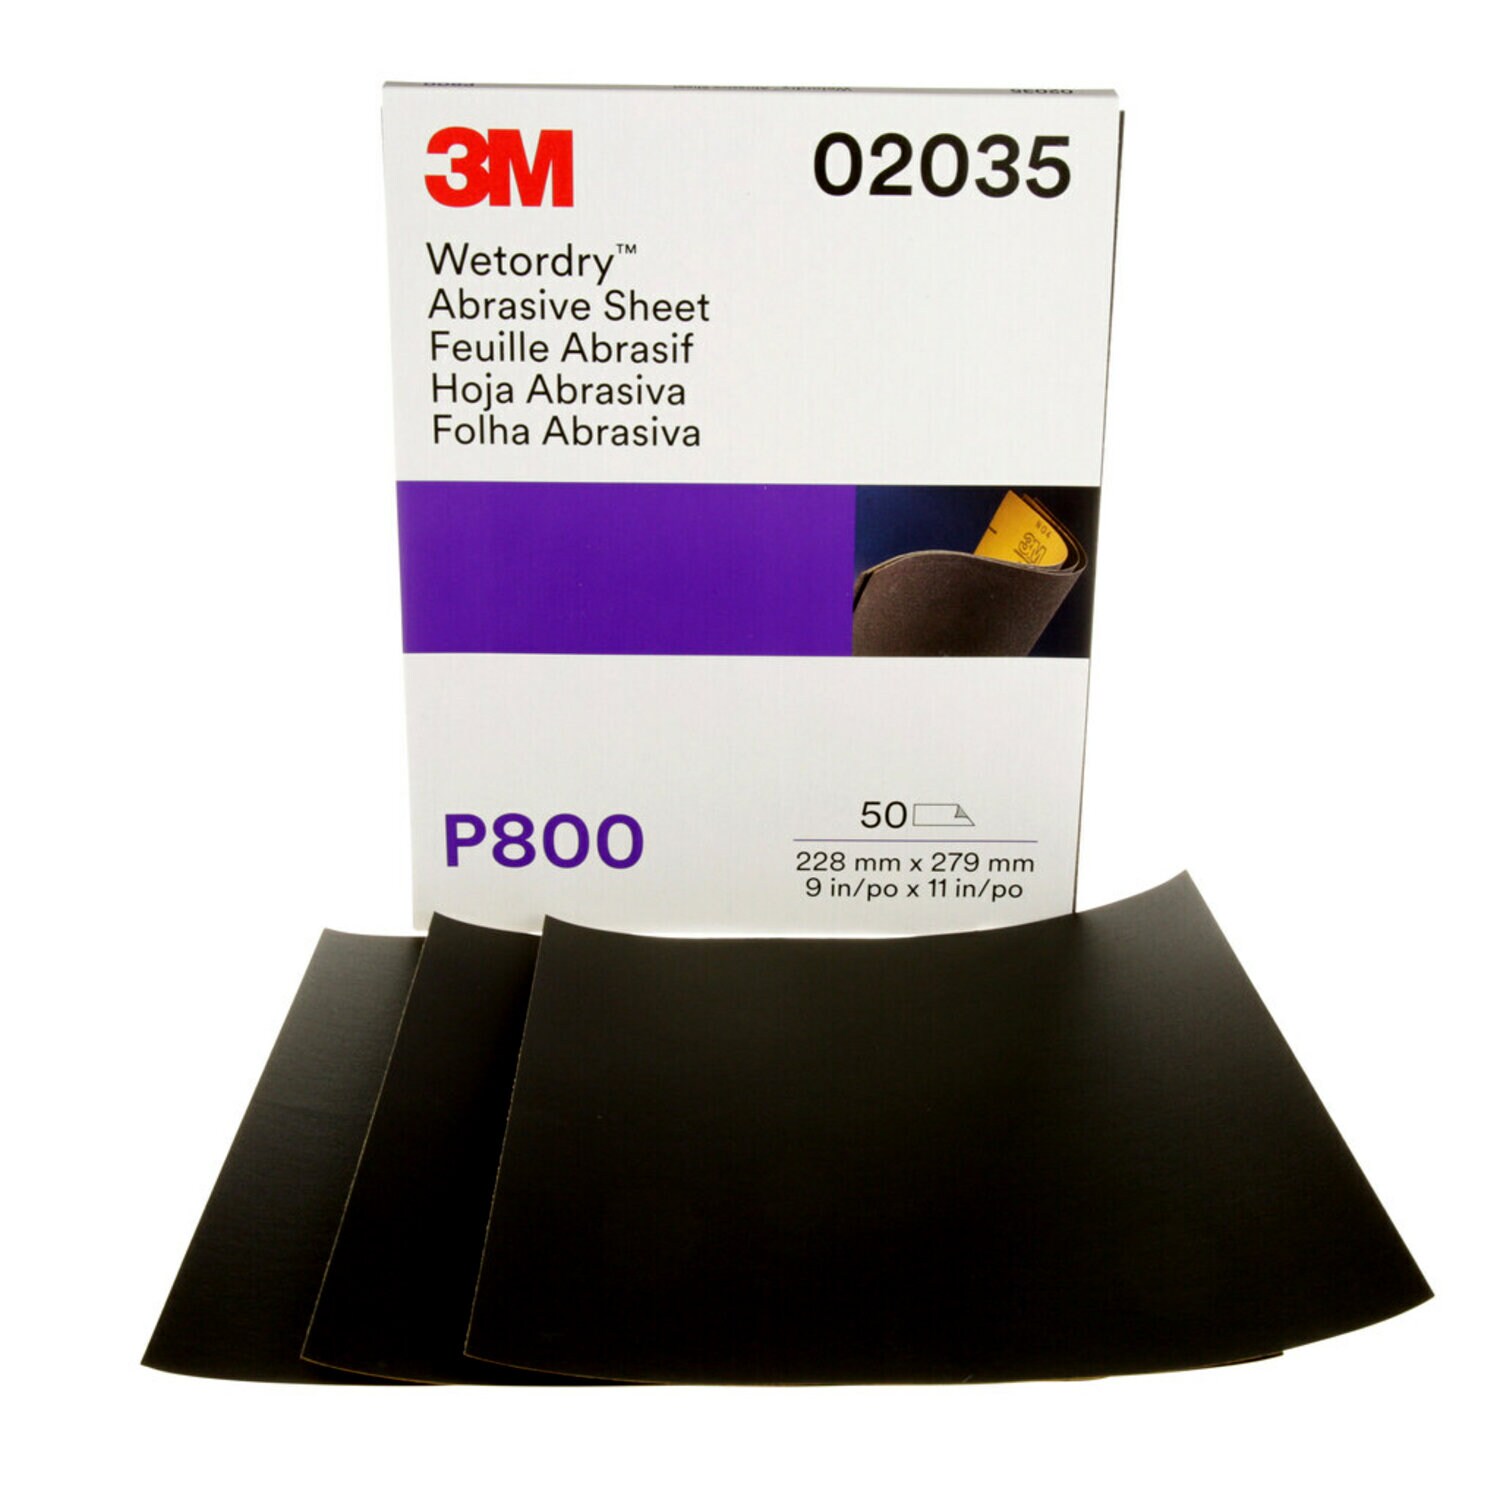 7000028324 - 3M Wetordry Abrasive Sheet 213Q, 02035, P800, 9 in x 11 in, 50 sheets
per carton, 5 cartons per case